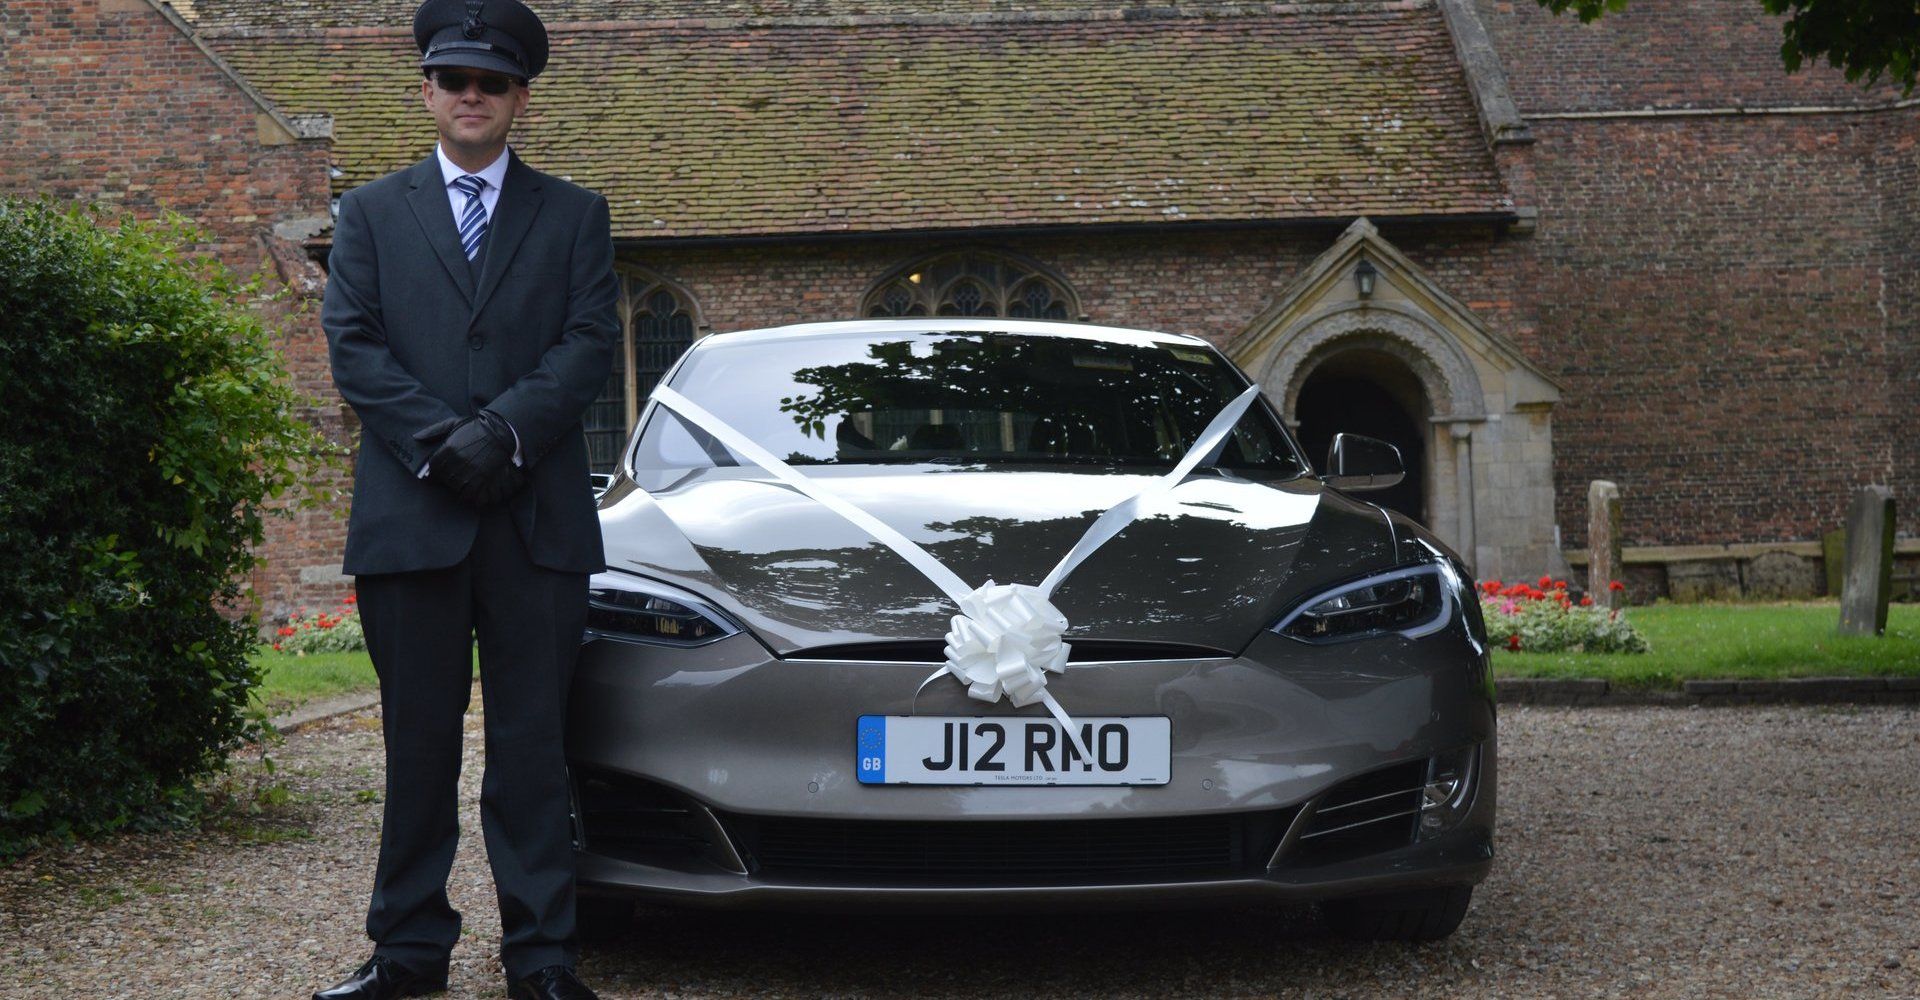 A chauffeur beside a wedding car